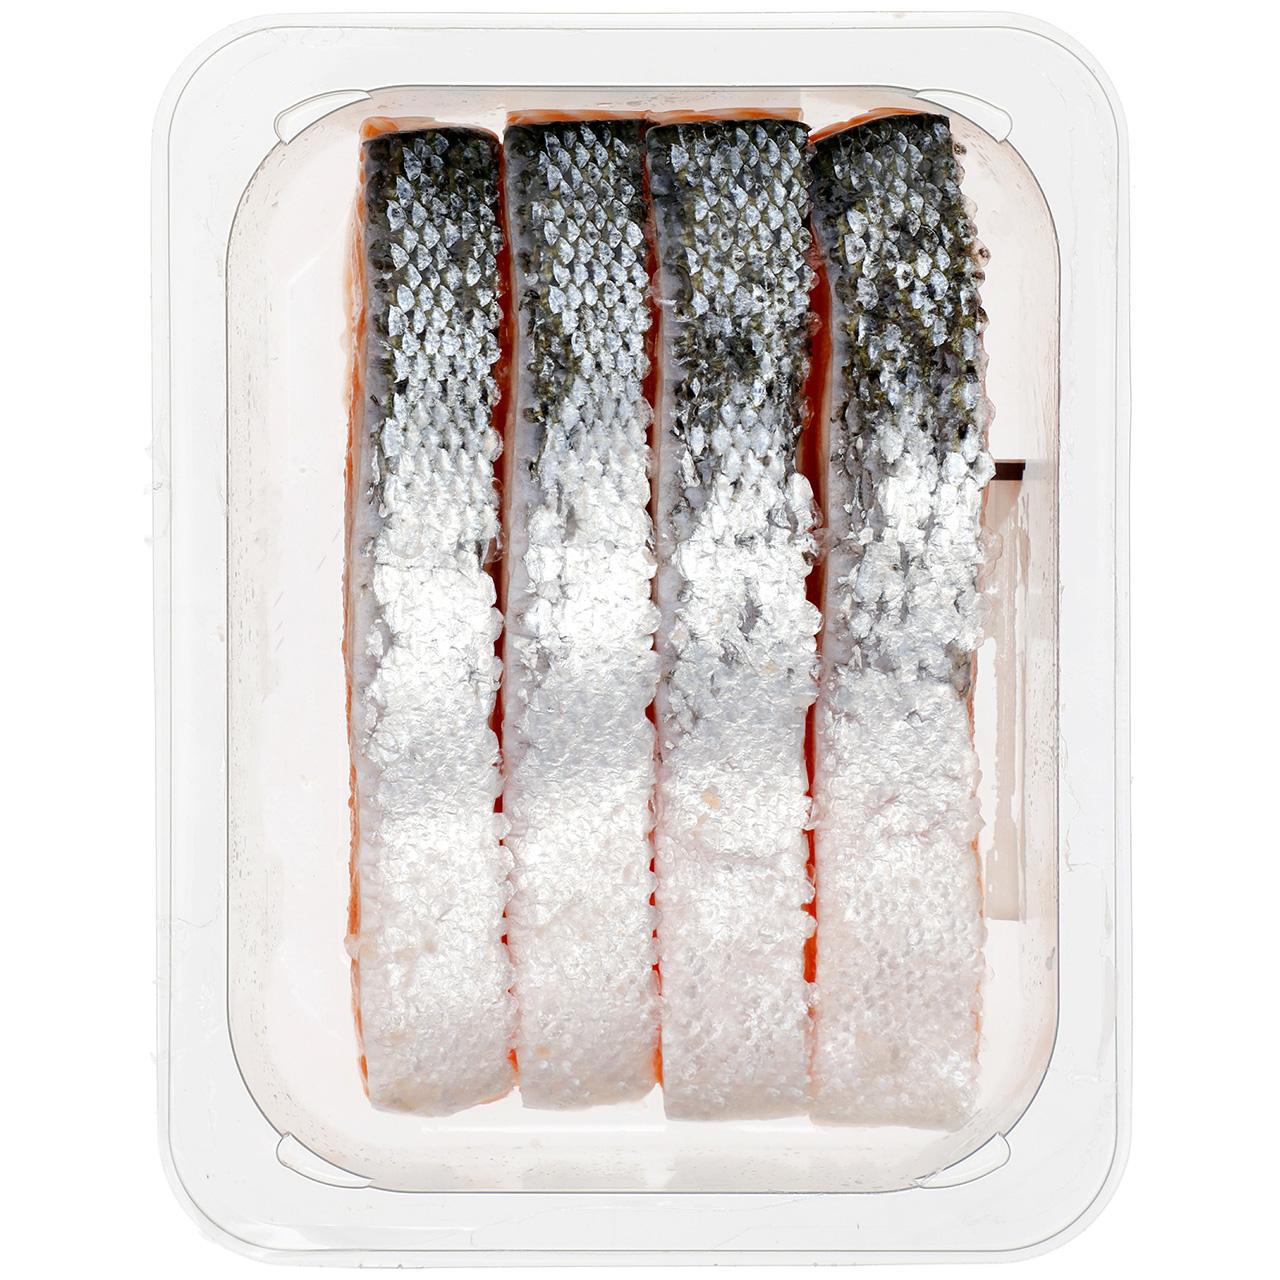 M&S 4 Scottish Salmon Fillets Skin On 480g